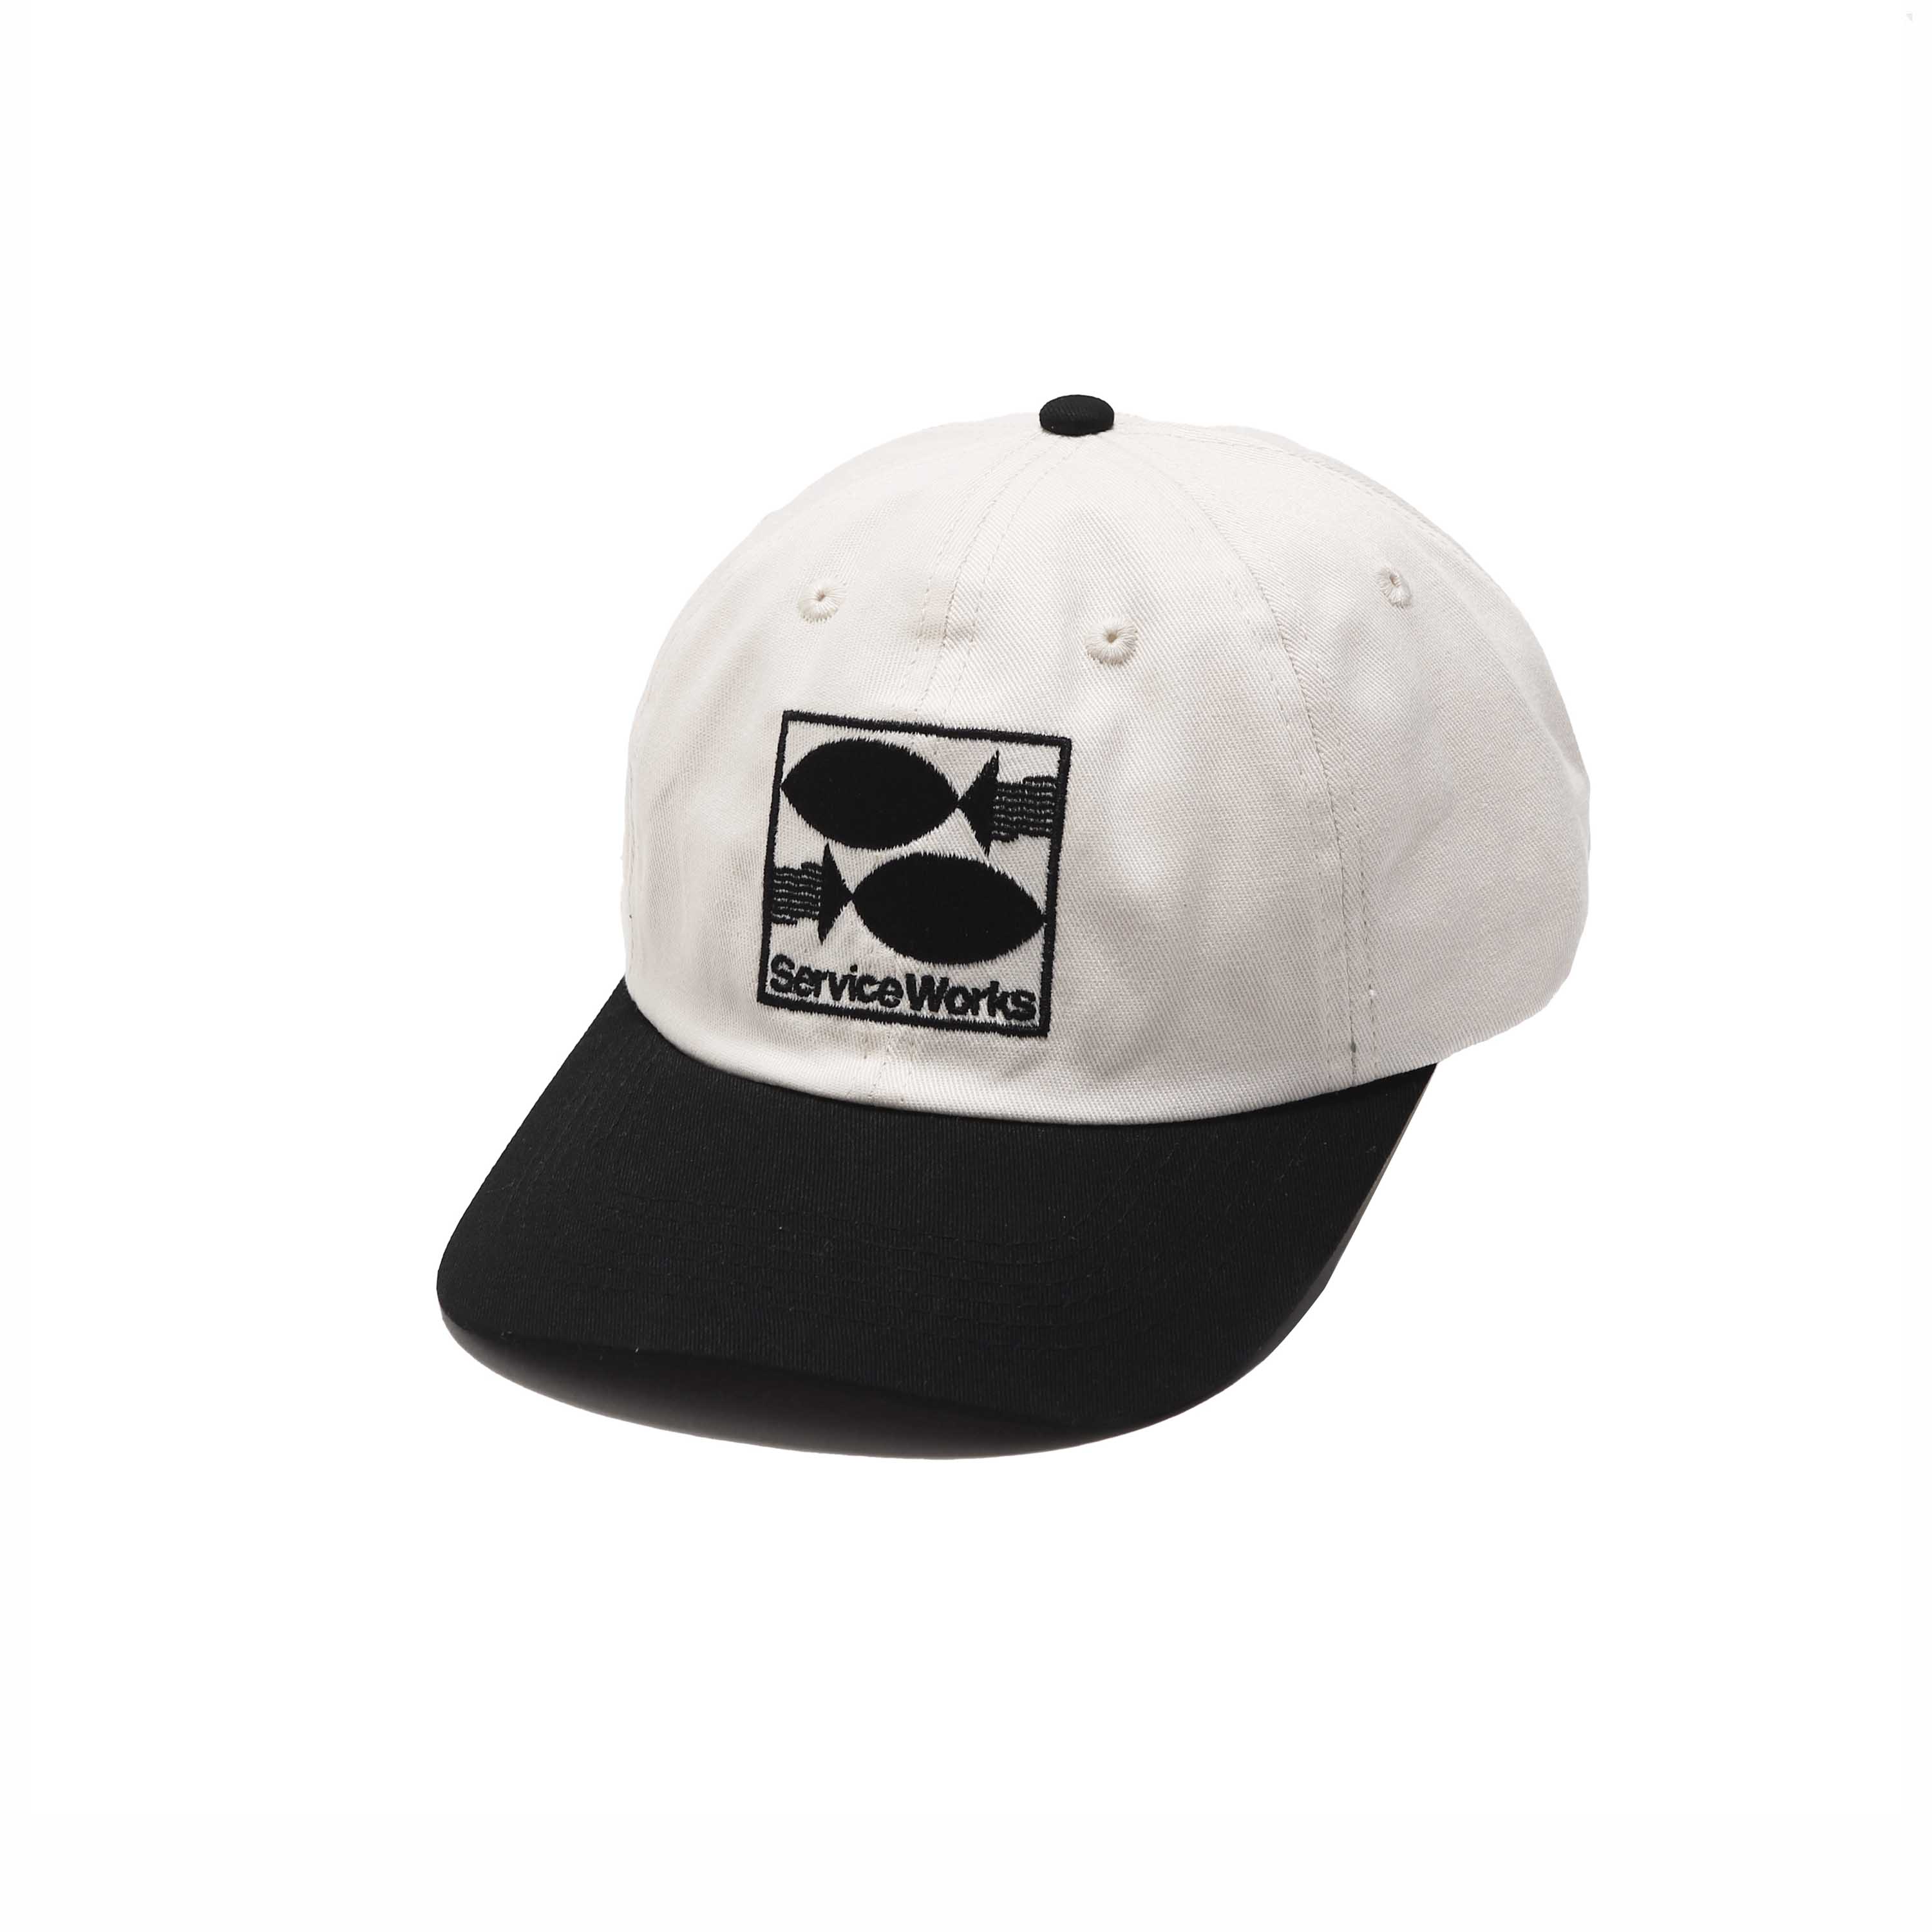 TURBOT CAP - WHITE/BLACK